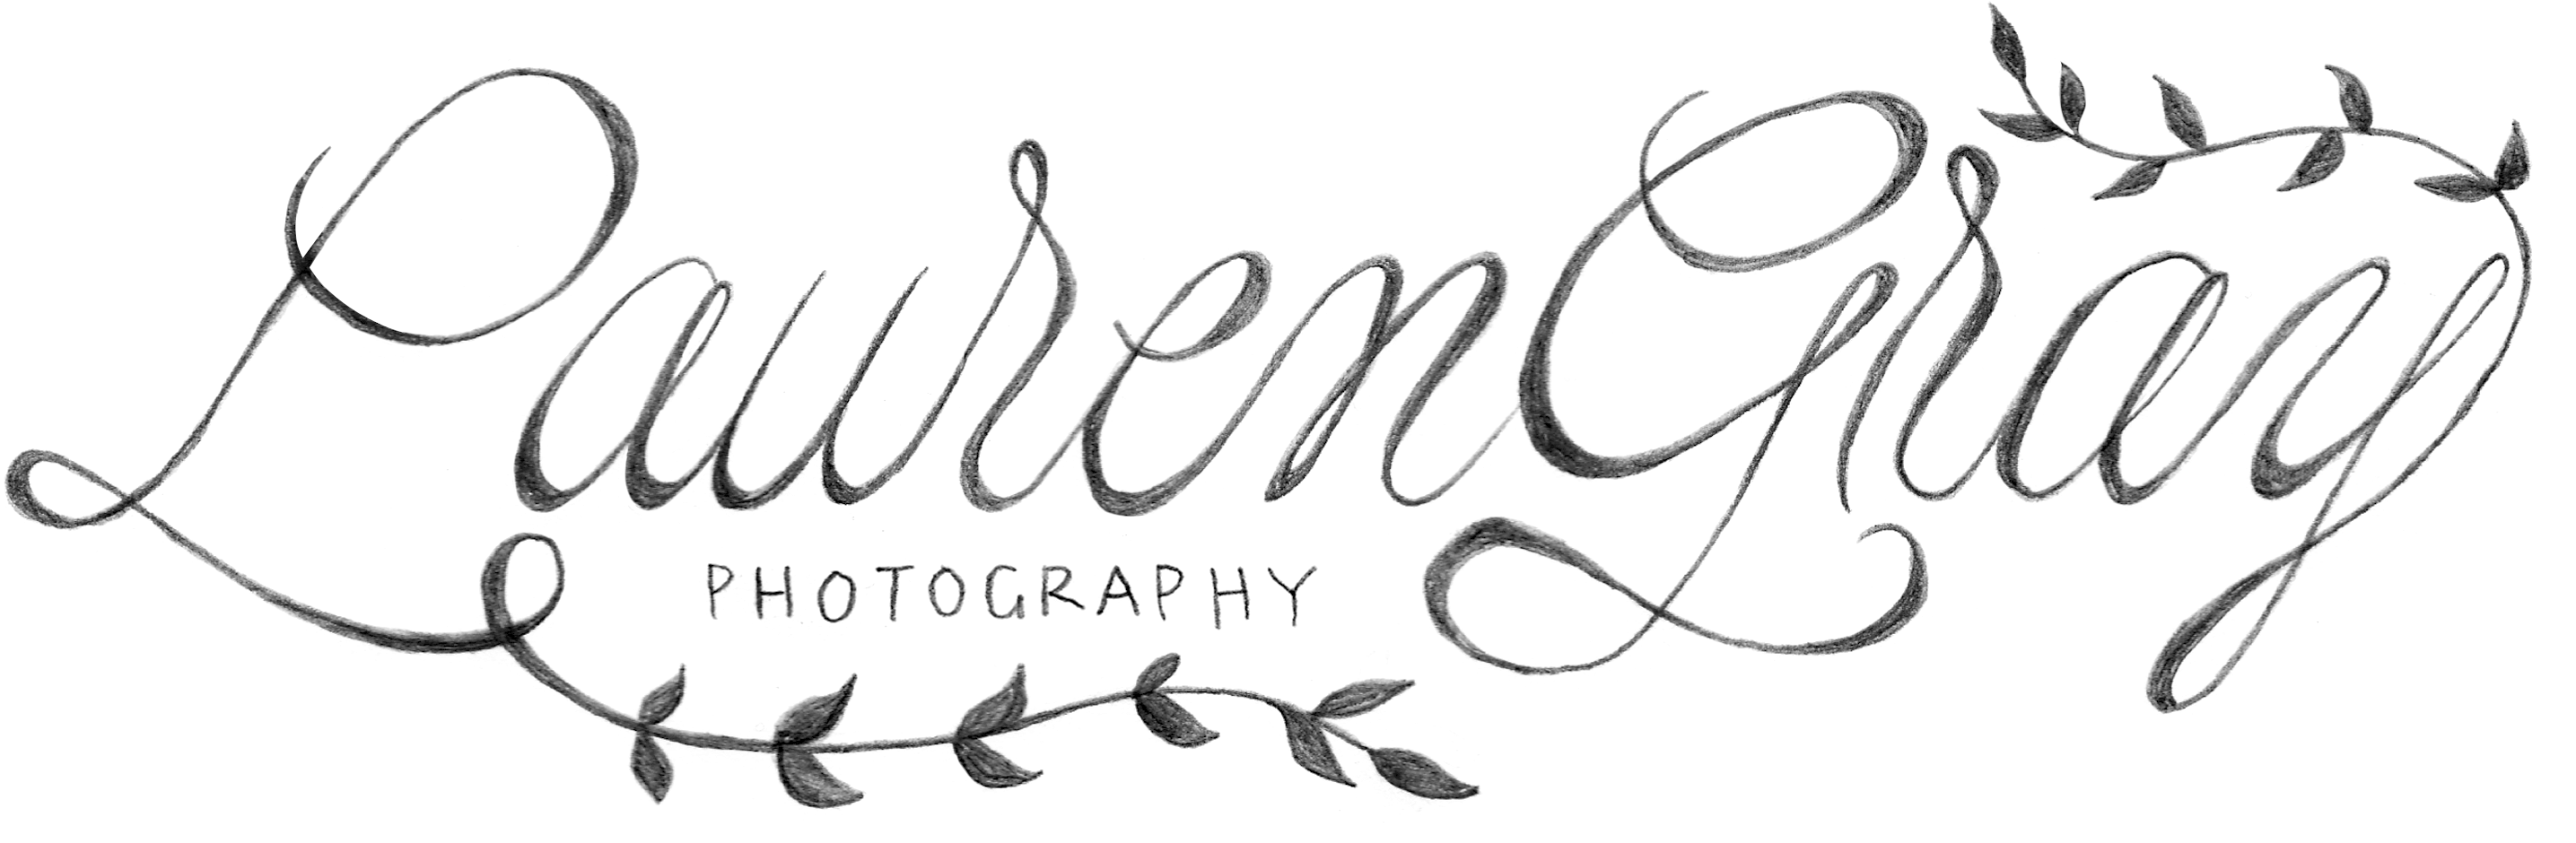 Elegant Calligraphy Photography Logo PNG image